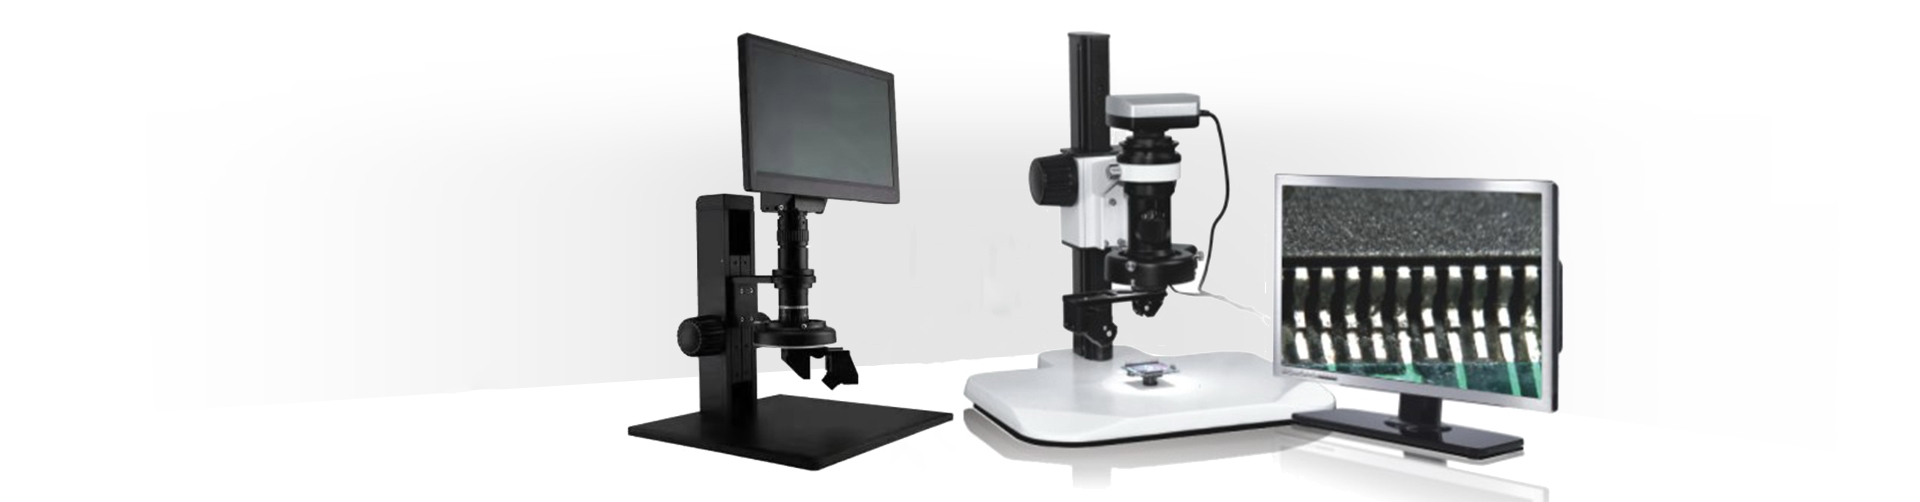 3DM-02三维立体数码显微镜